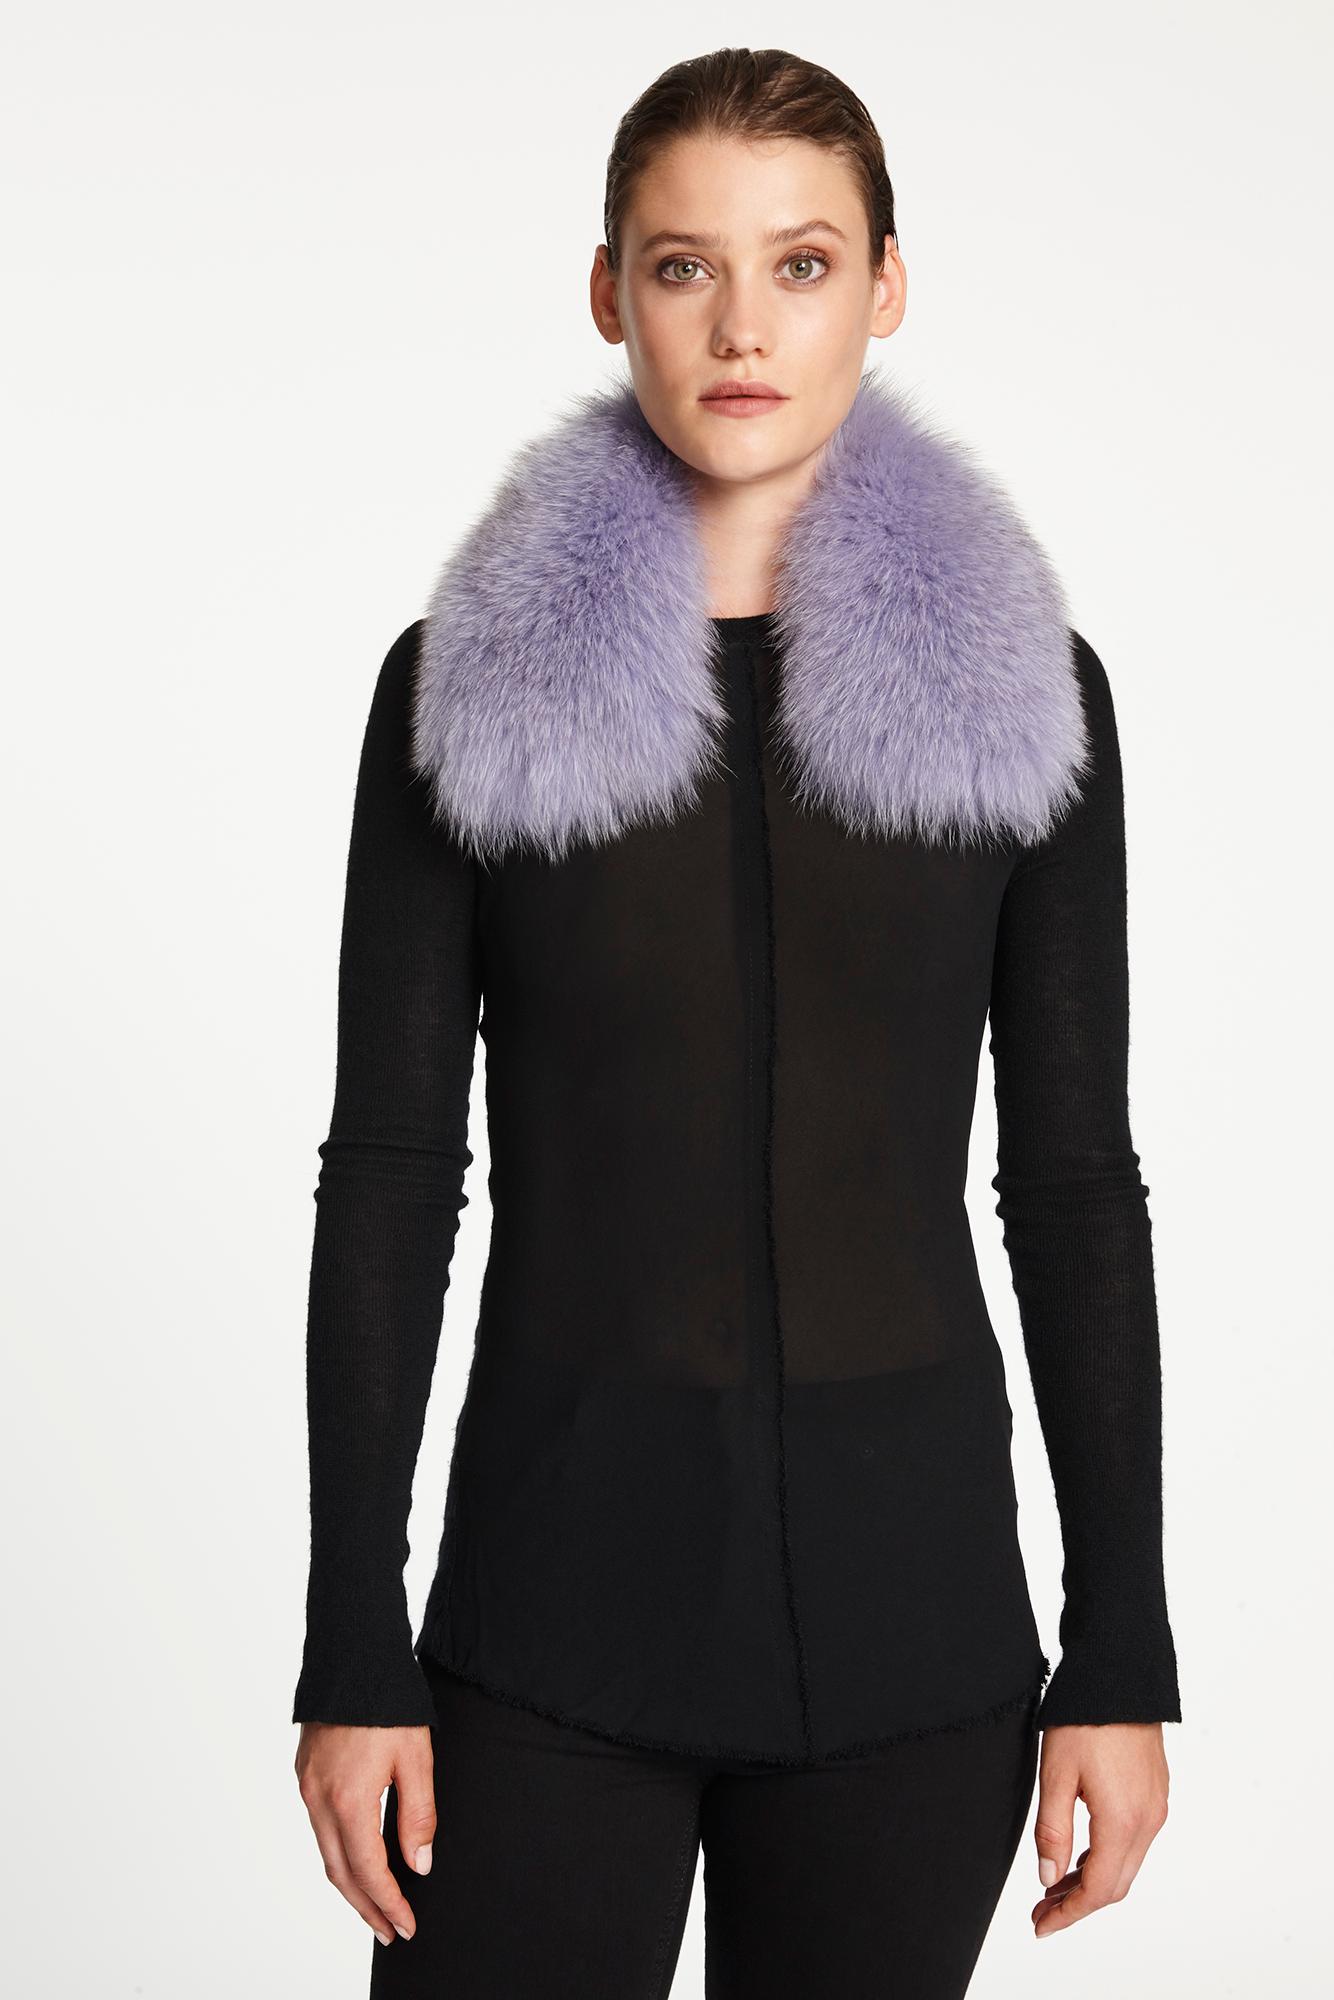 Purple Verheyen London Peter Pan Collar in Lilac Fox Fur - Brand New 